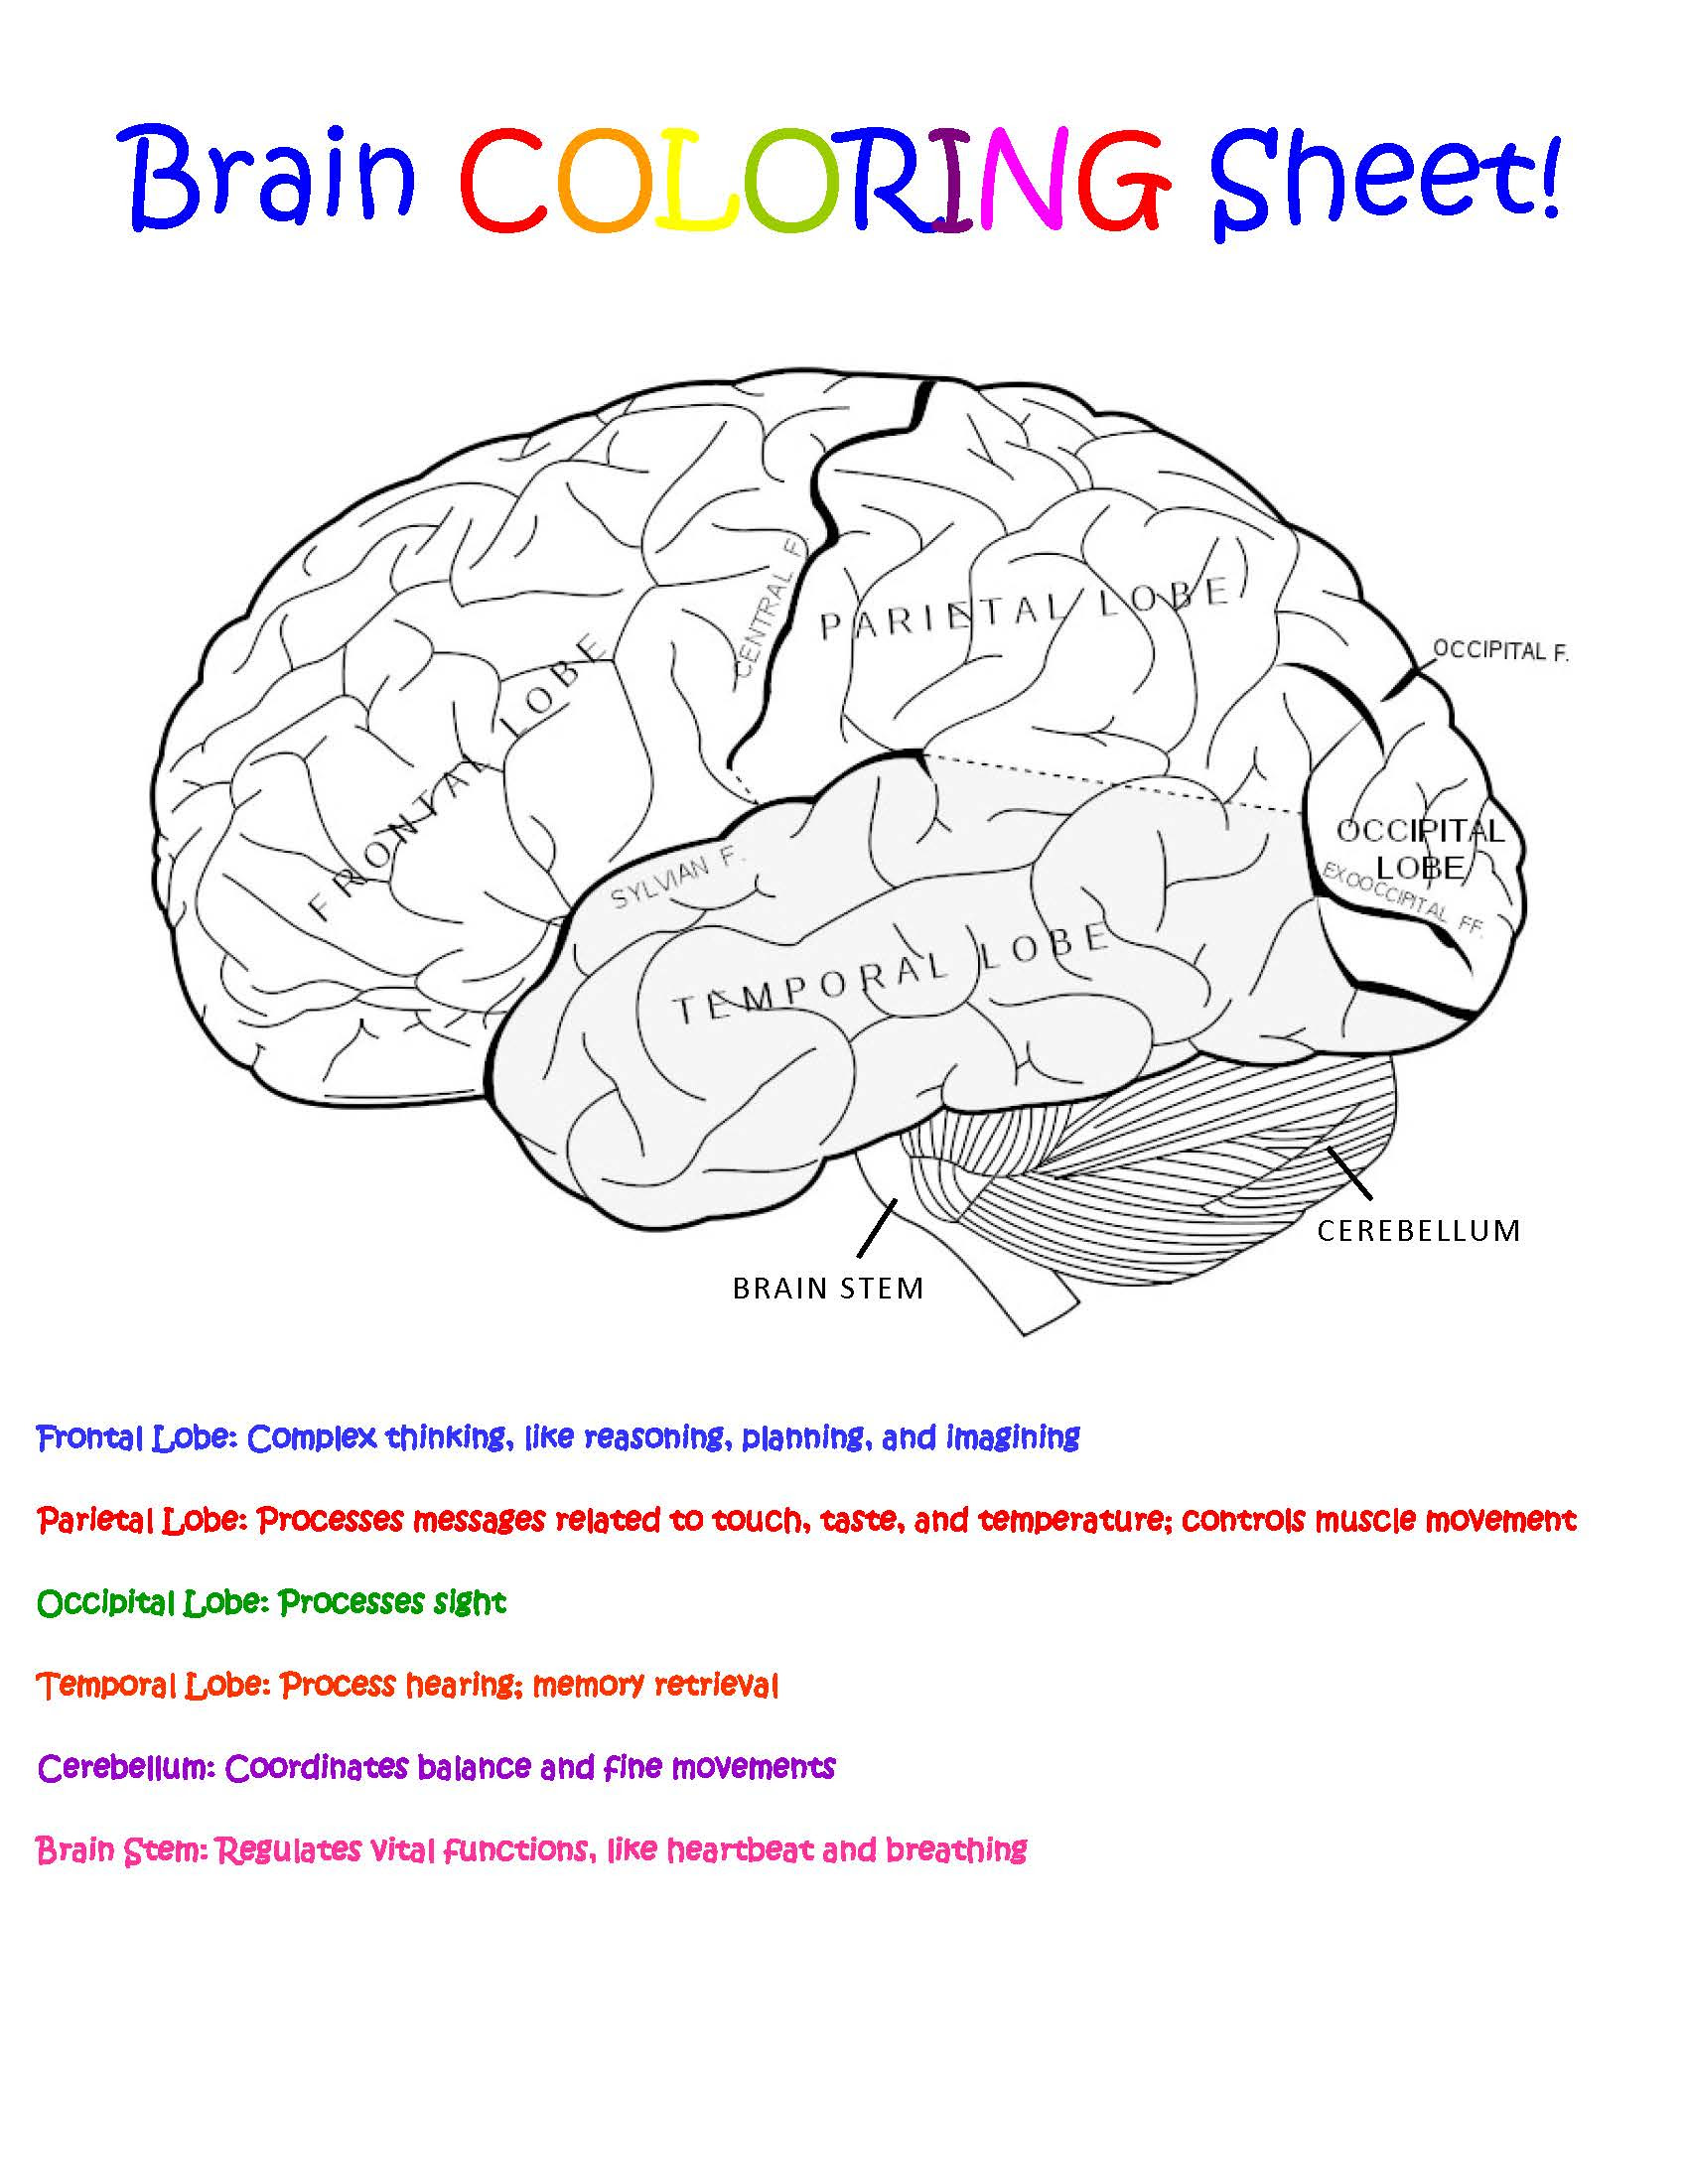 Parts Of The Brain Coloring Sheet Hakume Colors